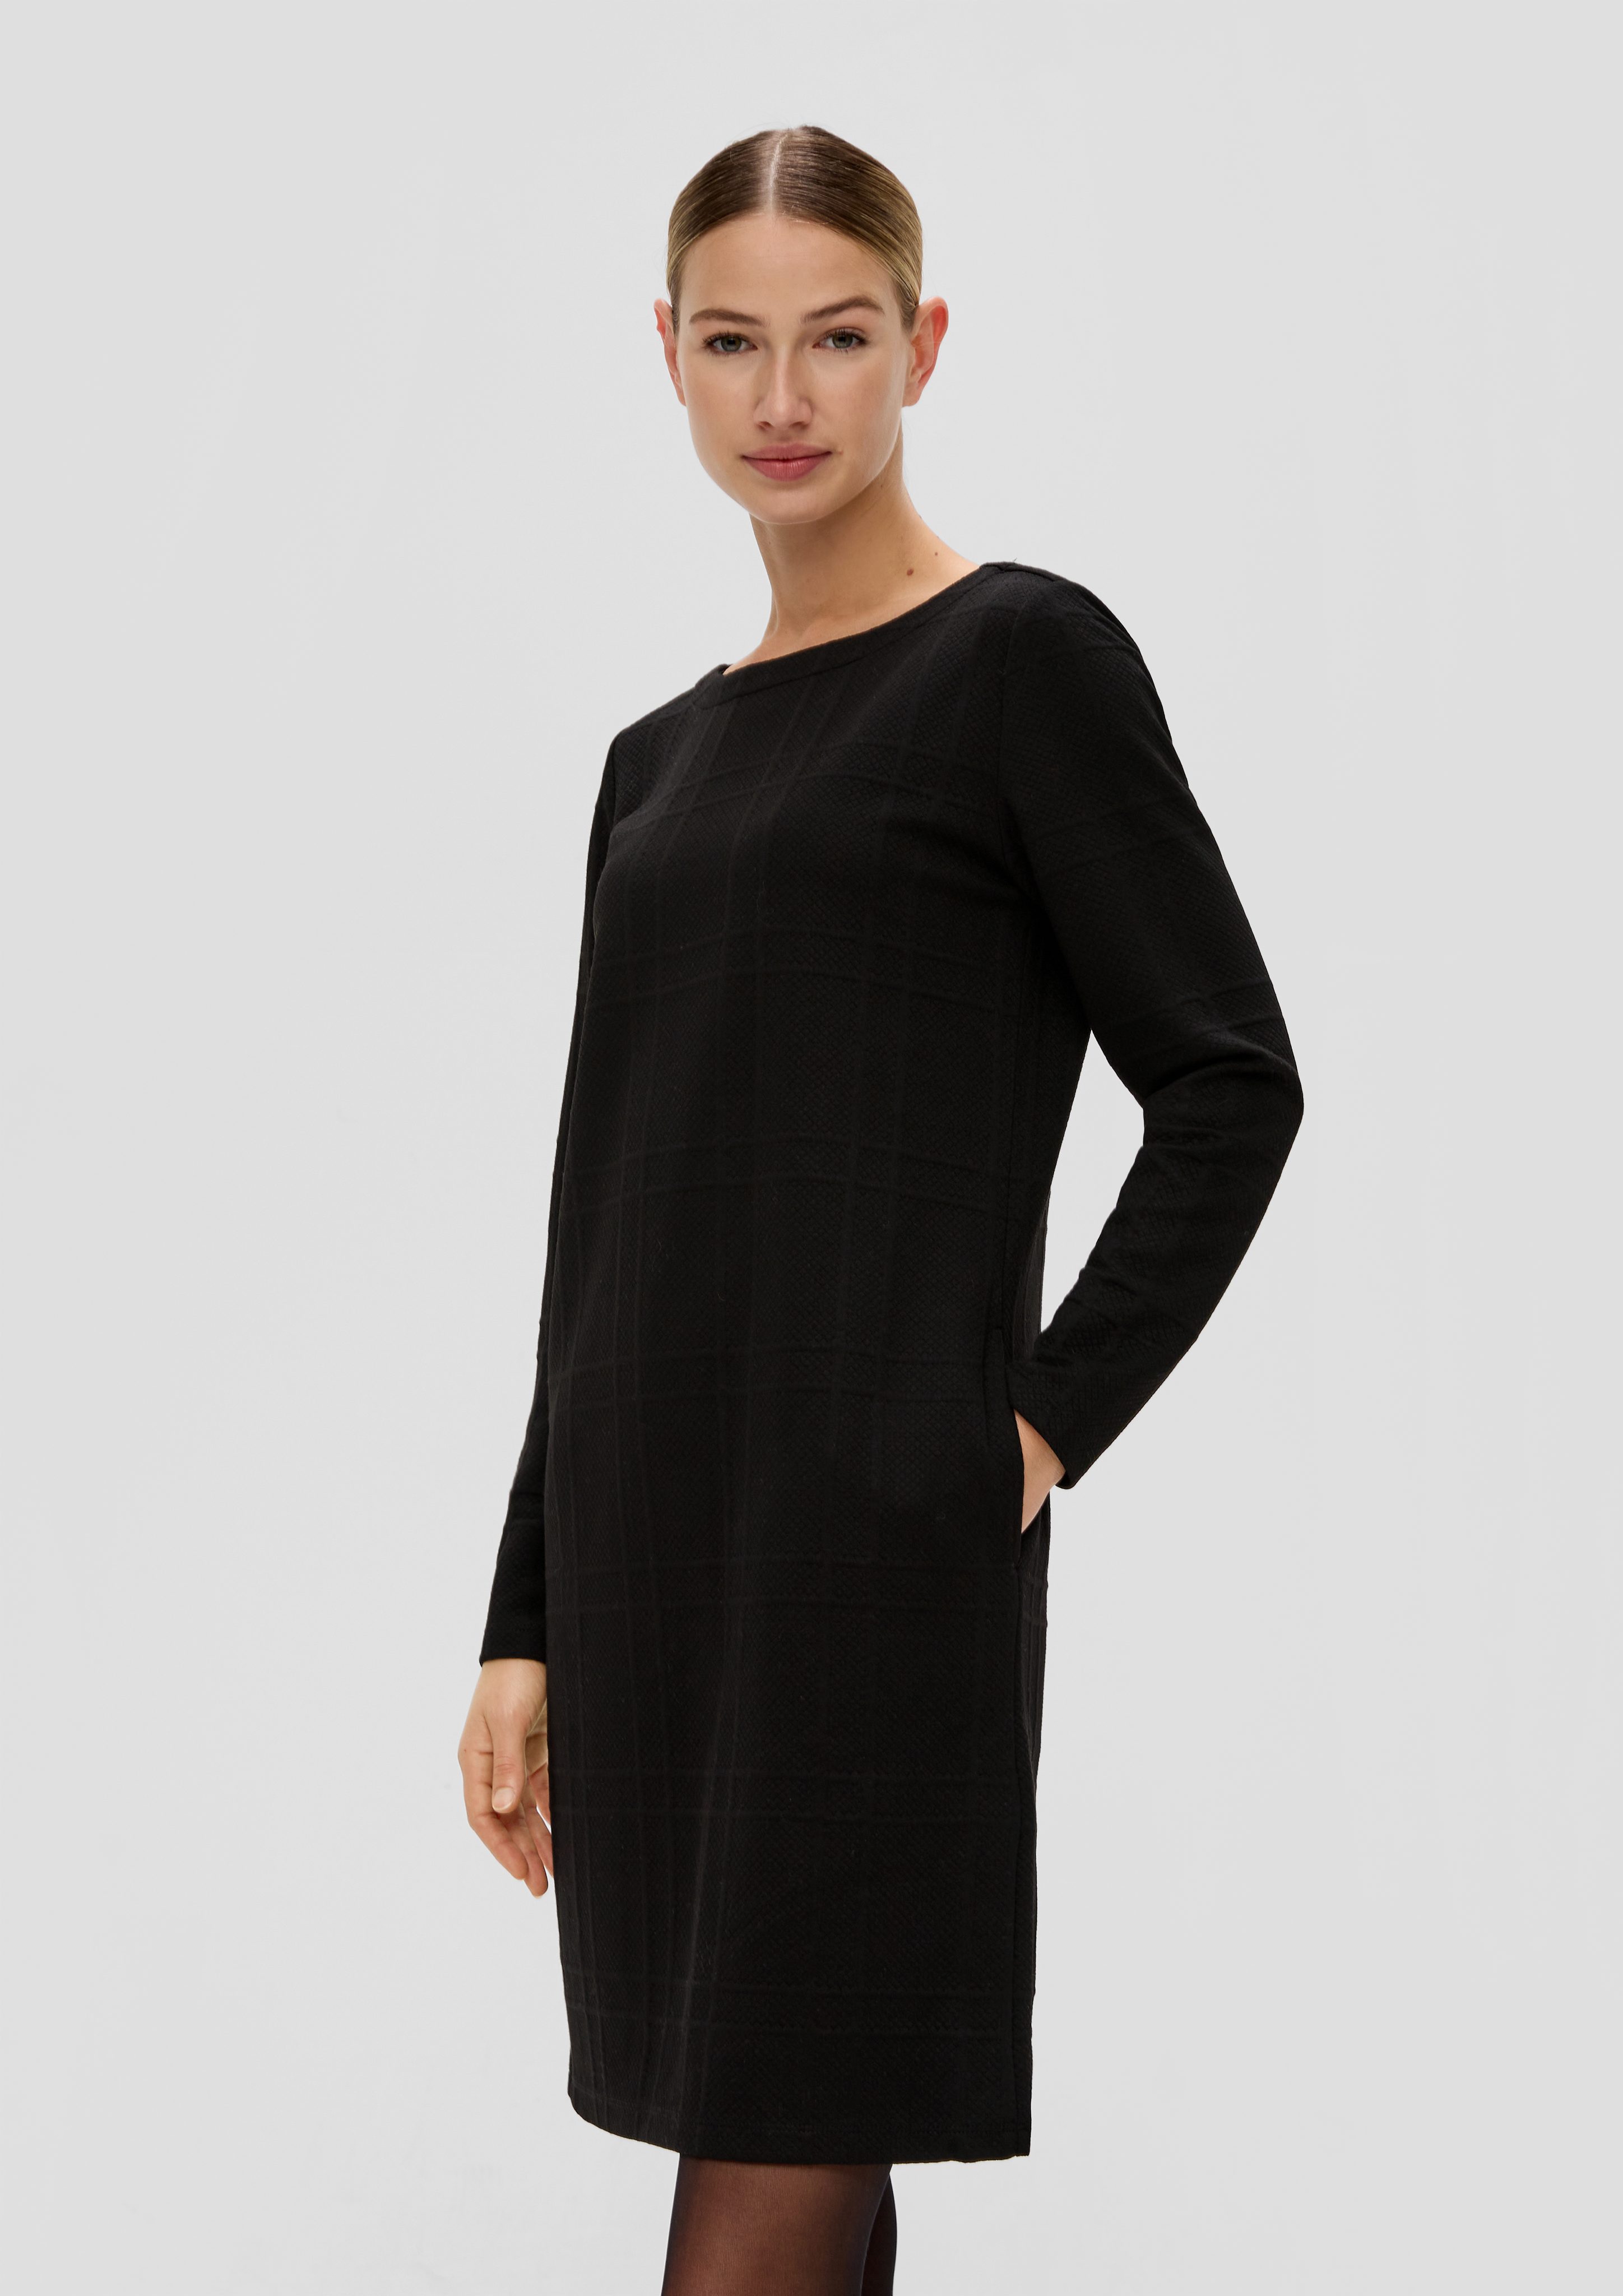 Viskose Jacquard-Kleid schwarz Minikleid mit s.Oliver